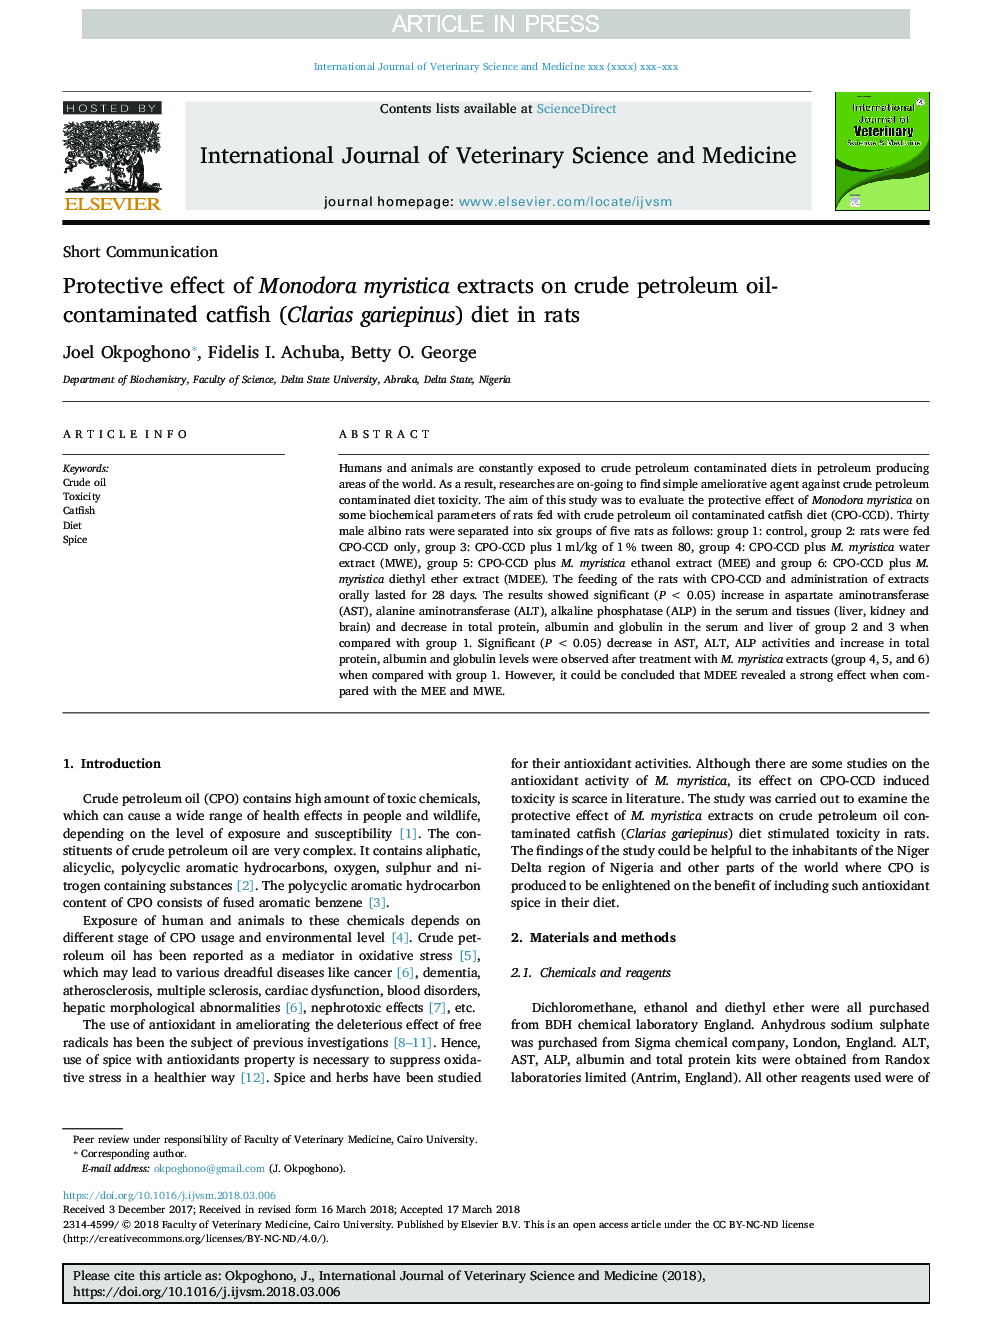 Protective effect of Monodora myristica extracts on crude petroleum oil-contaminated catfish (Clarias gariepinus) diet in rats